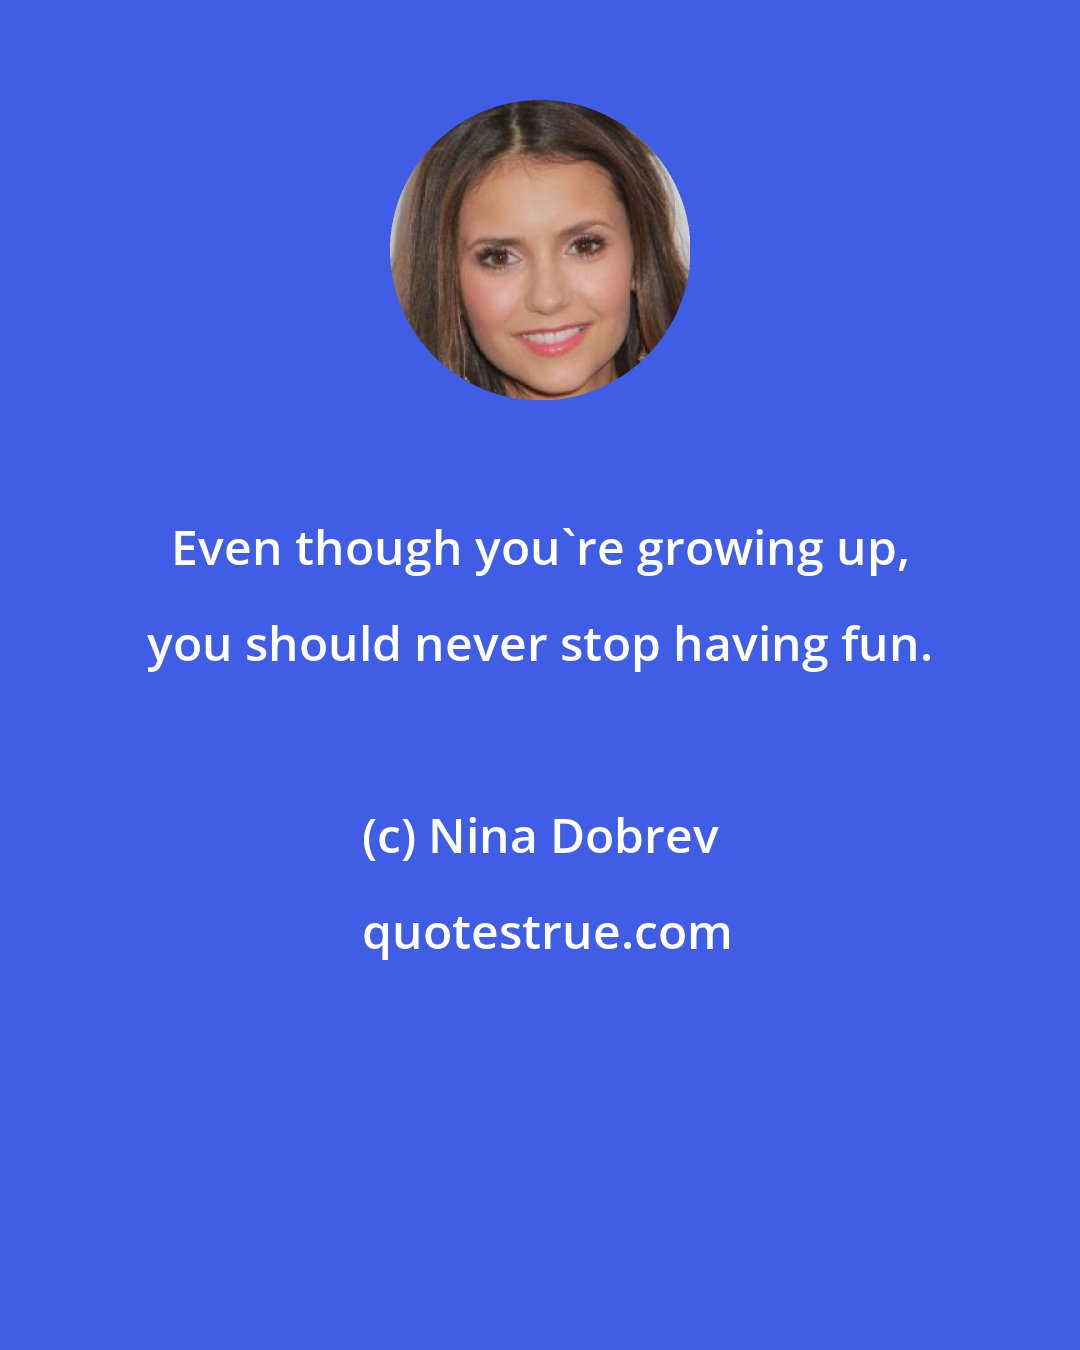 Nina Dobrev: Even though you're growing up, you should never stop having fun.